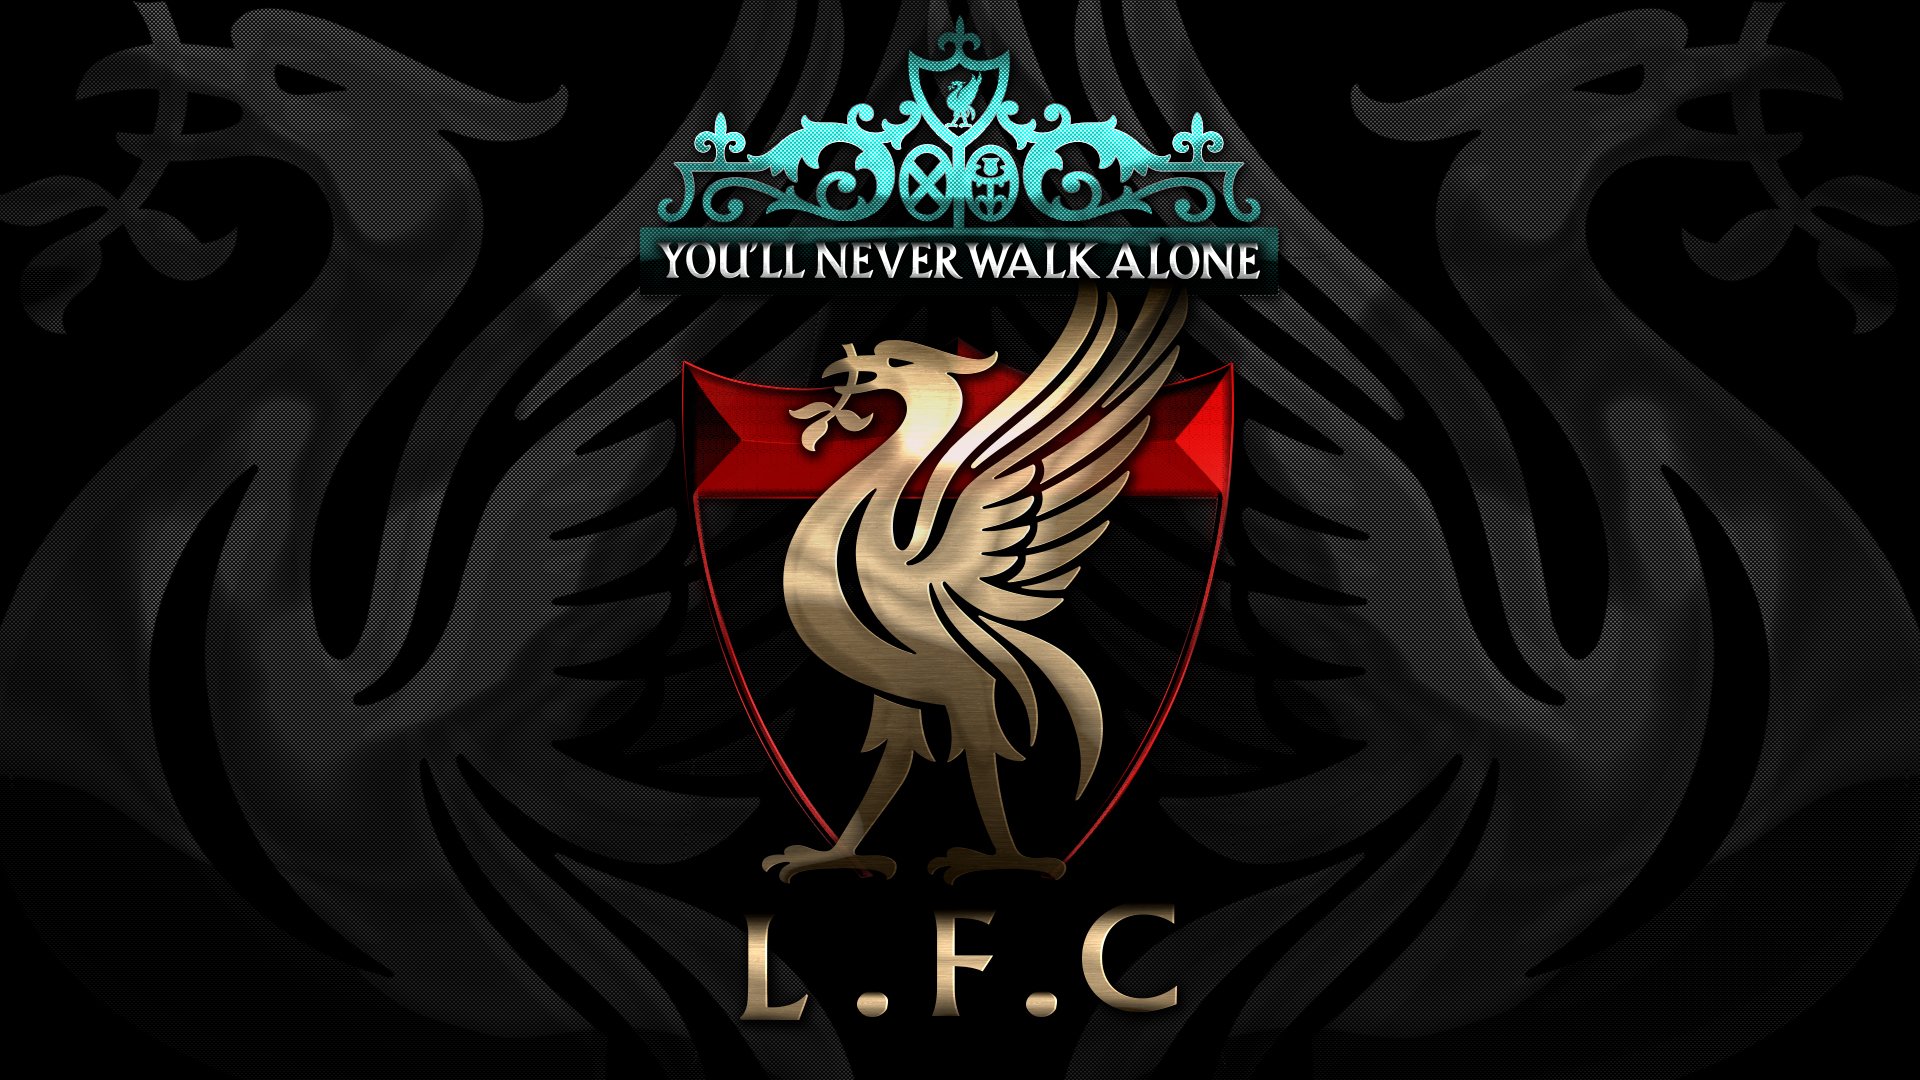 Liverpool FC The Red Warriors YNWA by Sreefu on